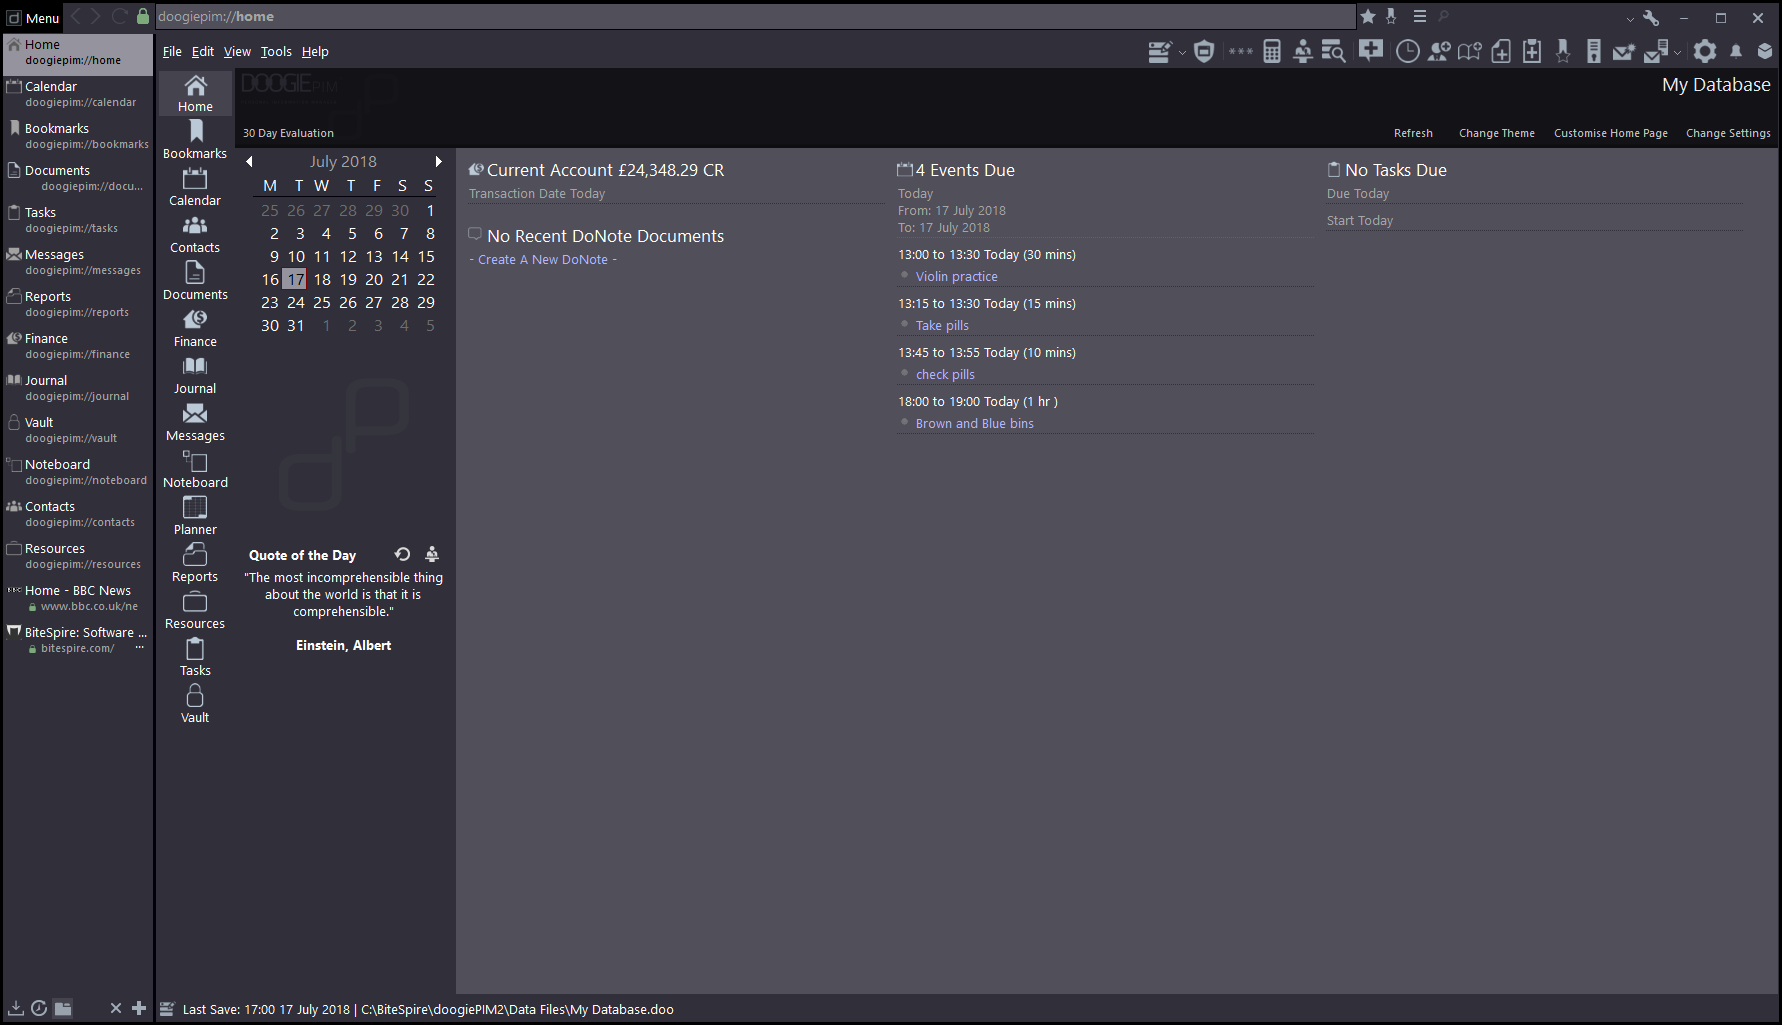 PIM Software, doogiePIM Screenshot